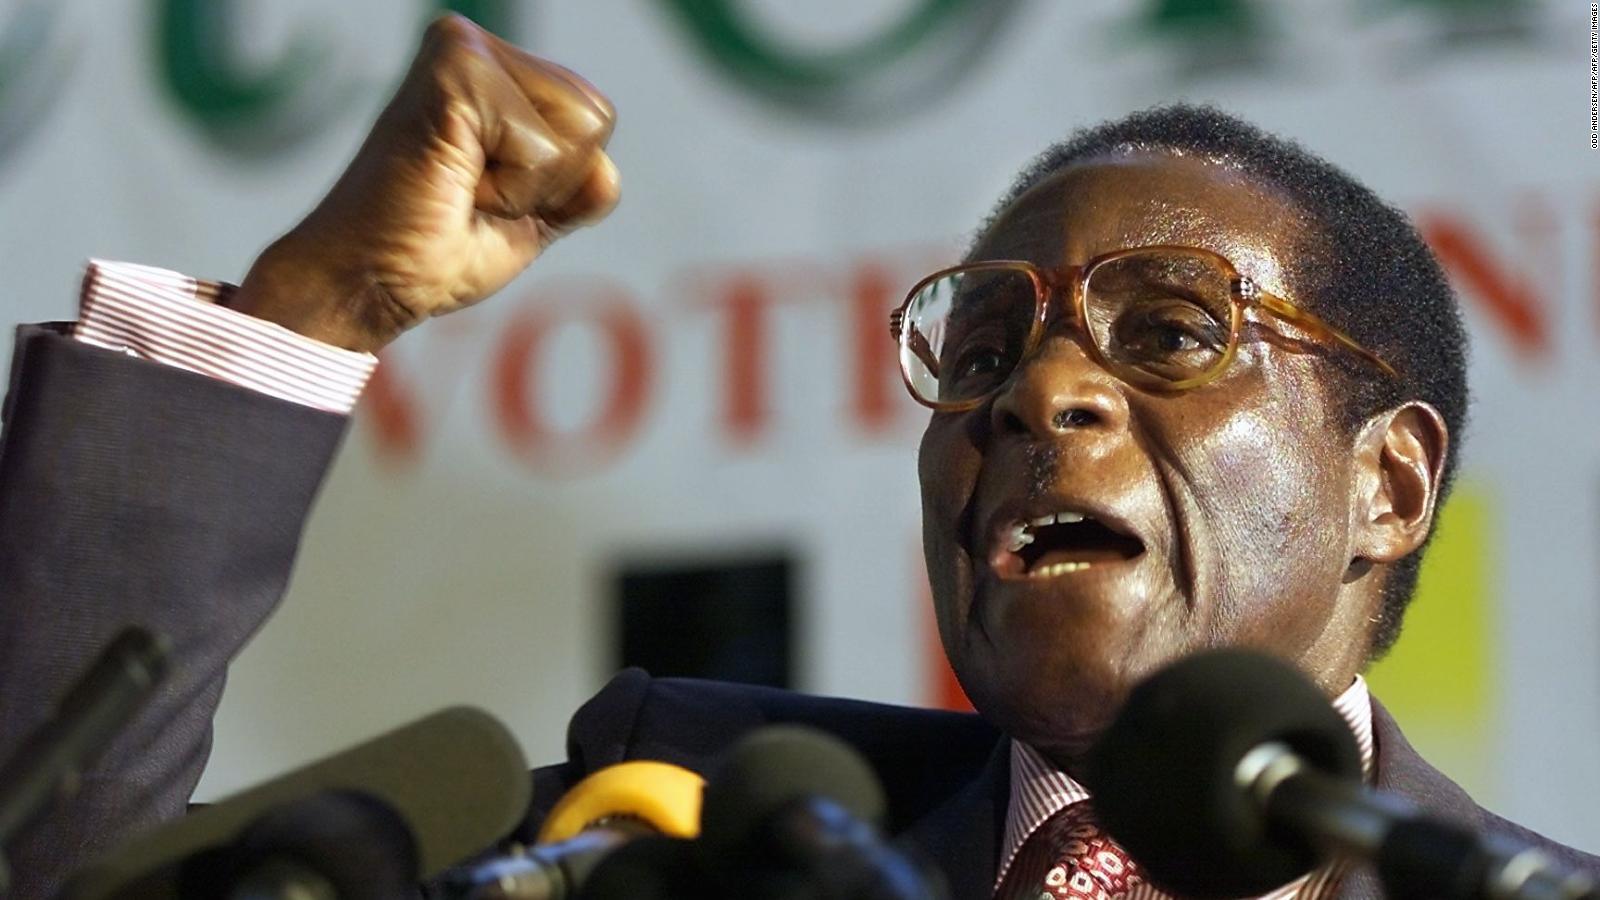 Zimbabwe: President Robert Mugabe Resigns from Office - Newslibre